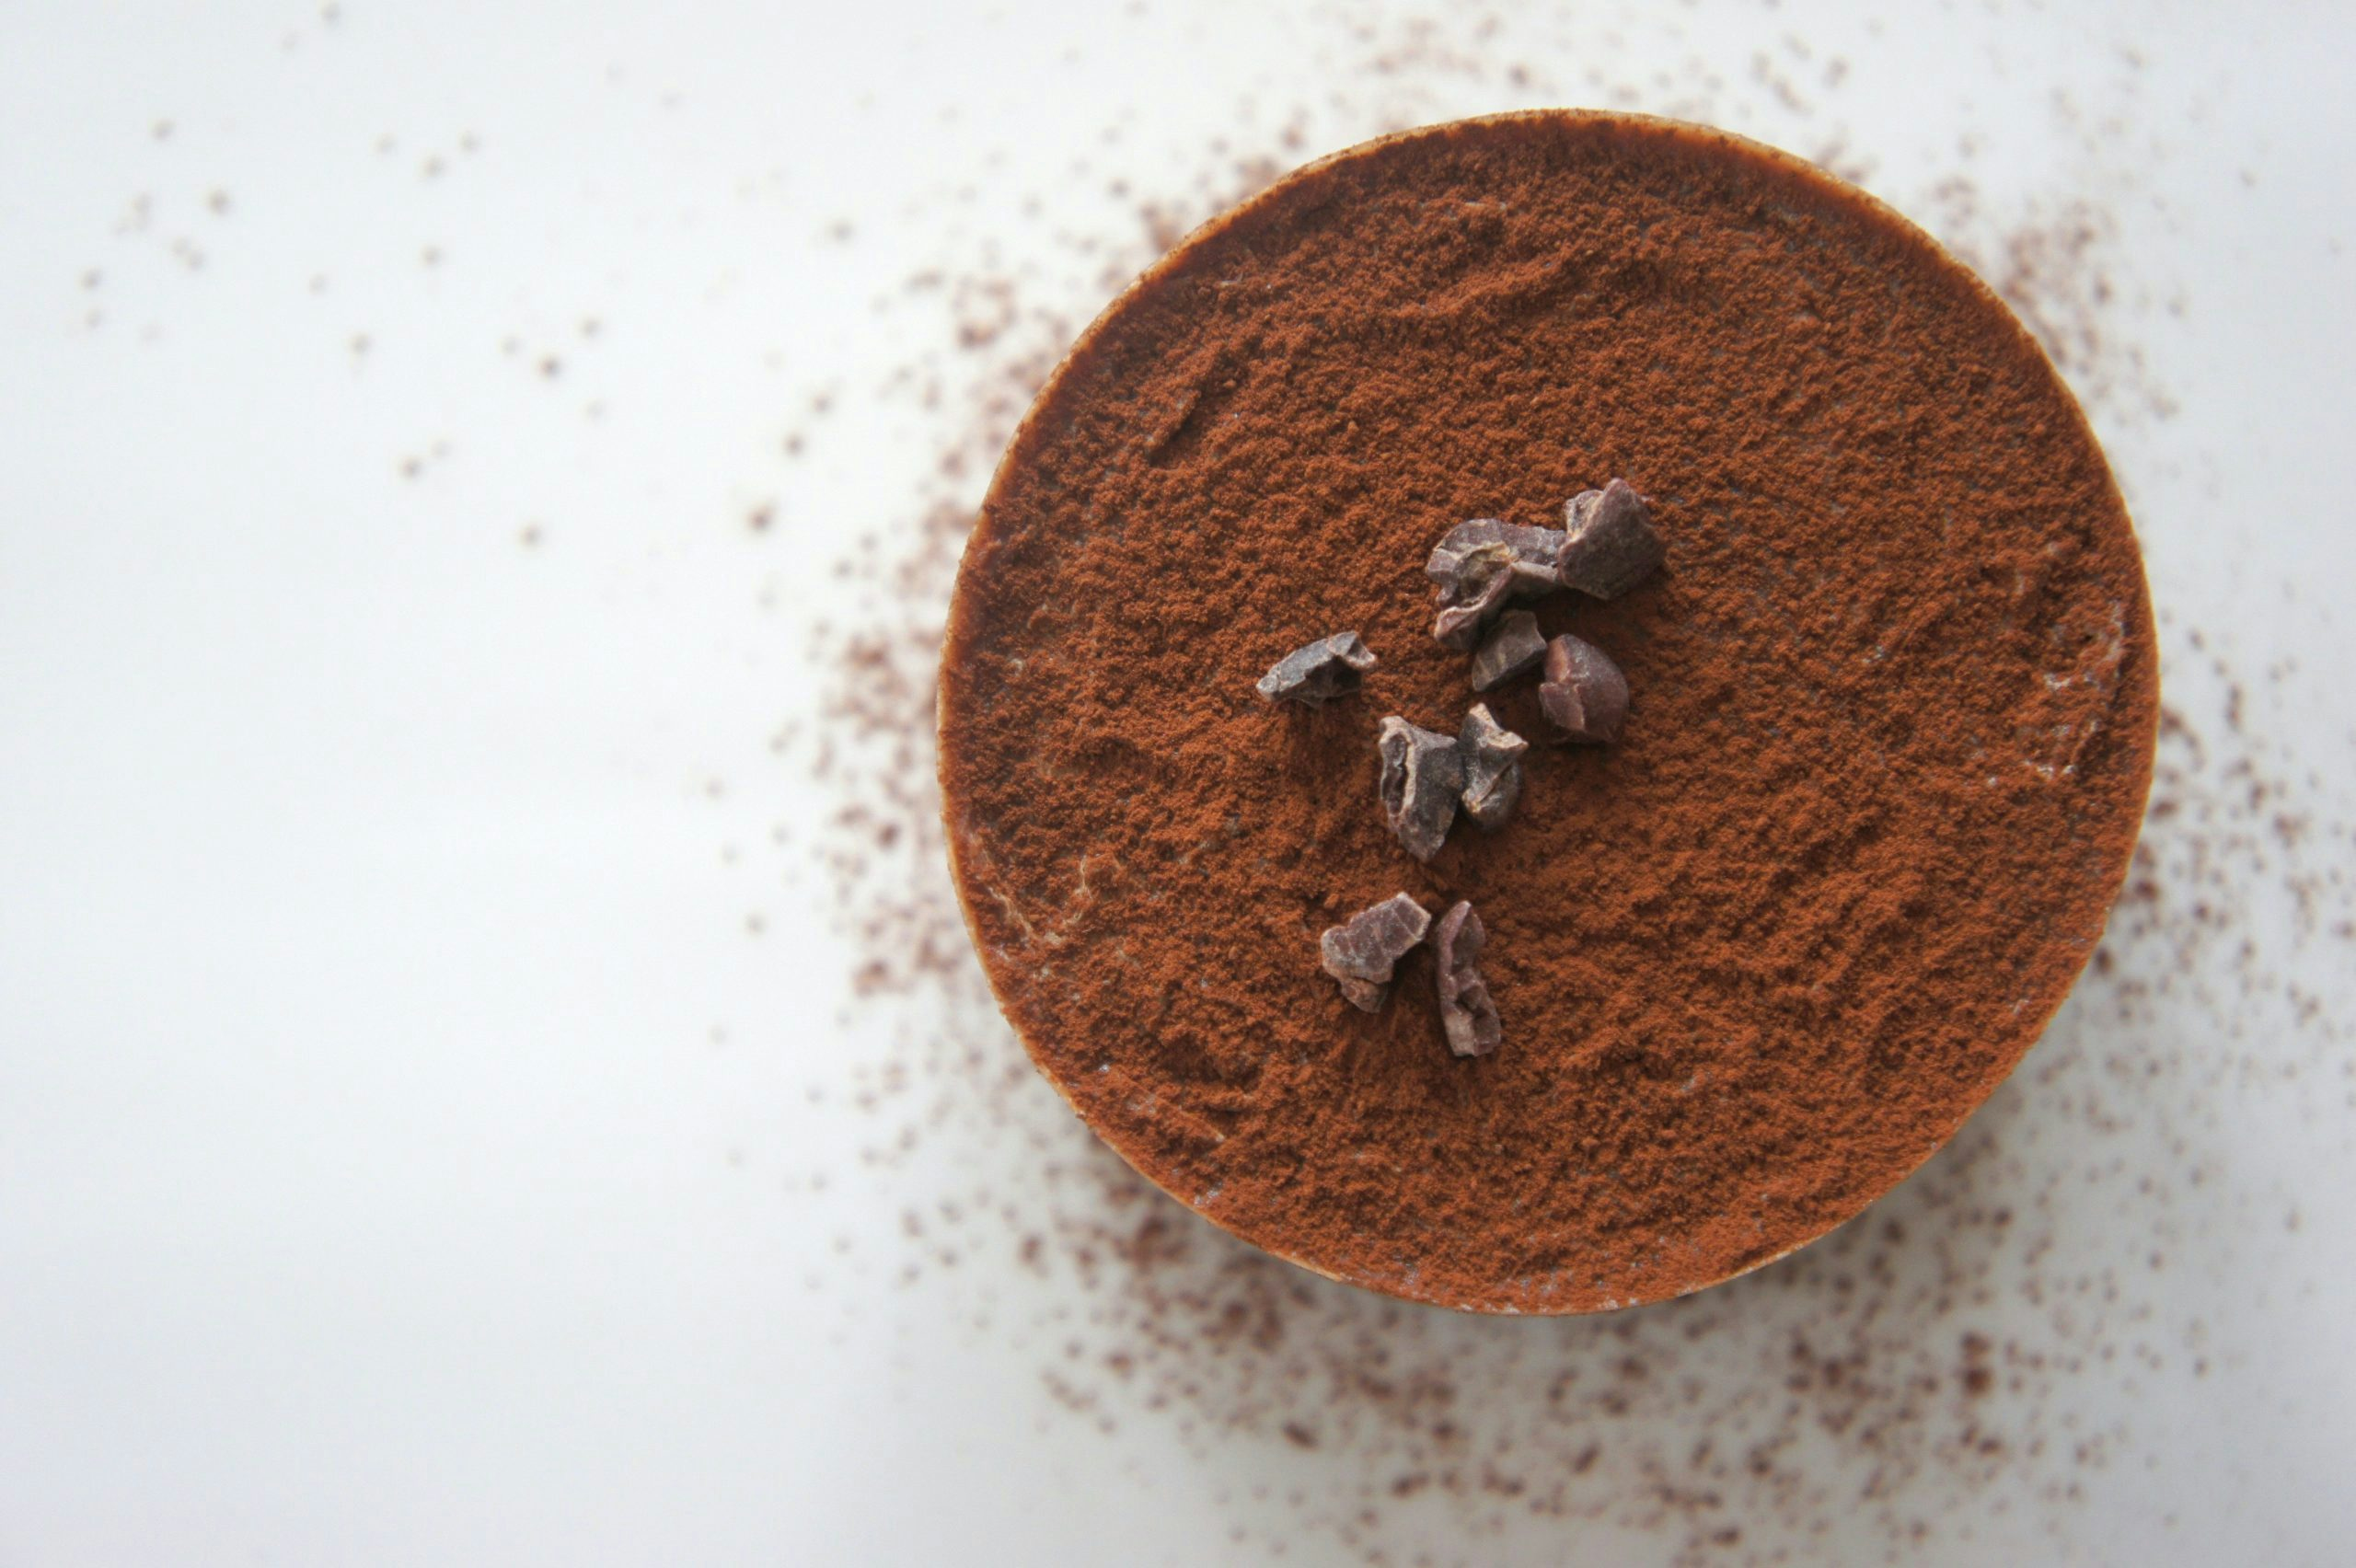 Cocoa powder drying